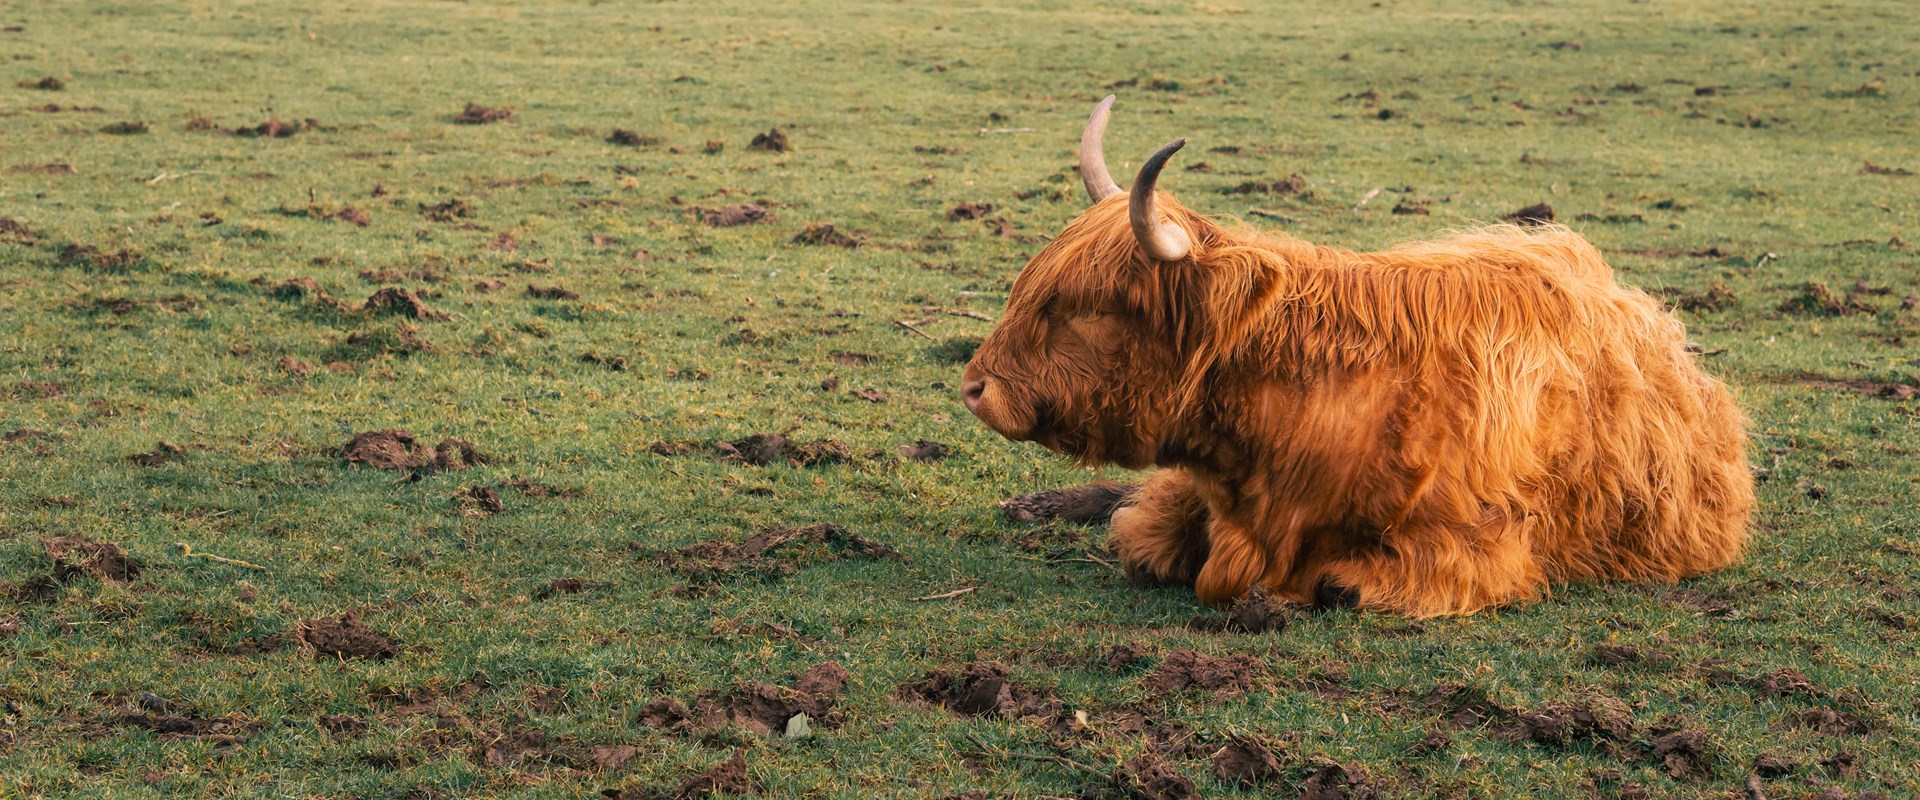 A big orange highland cow sits in a field.